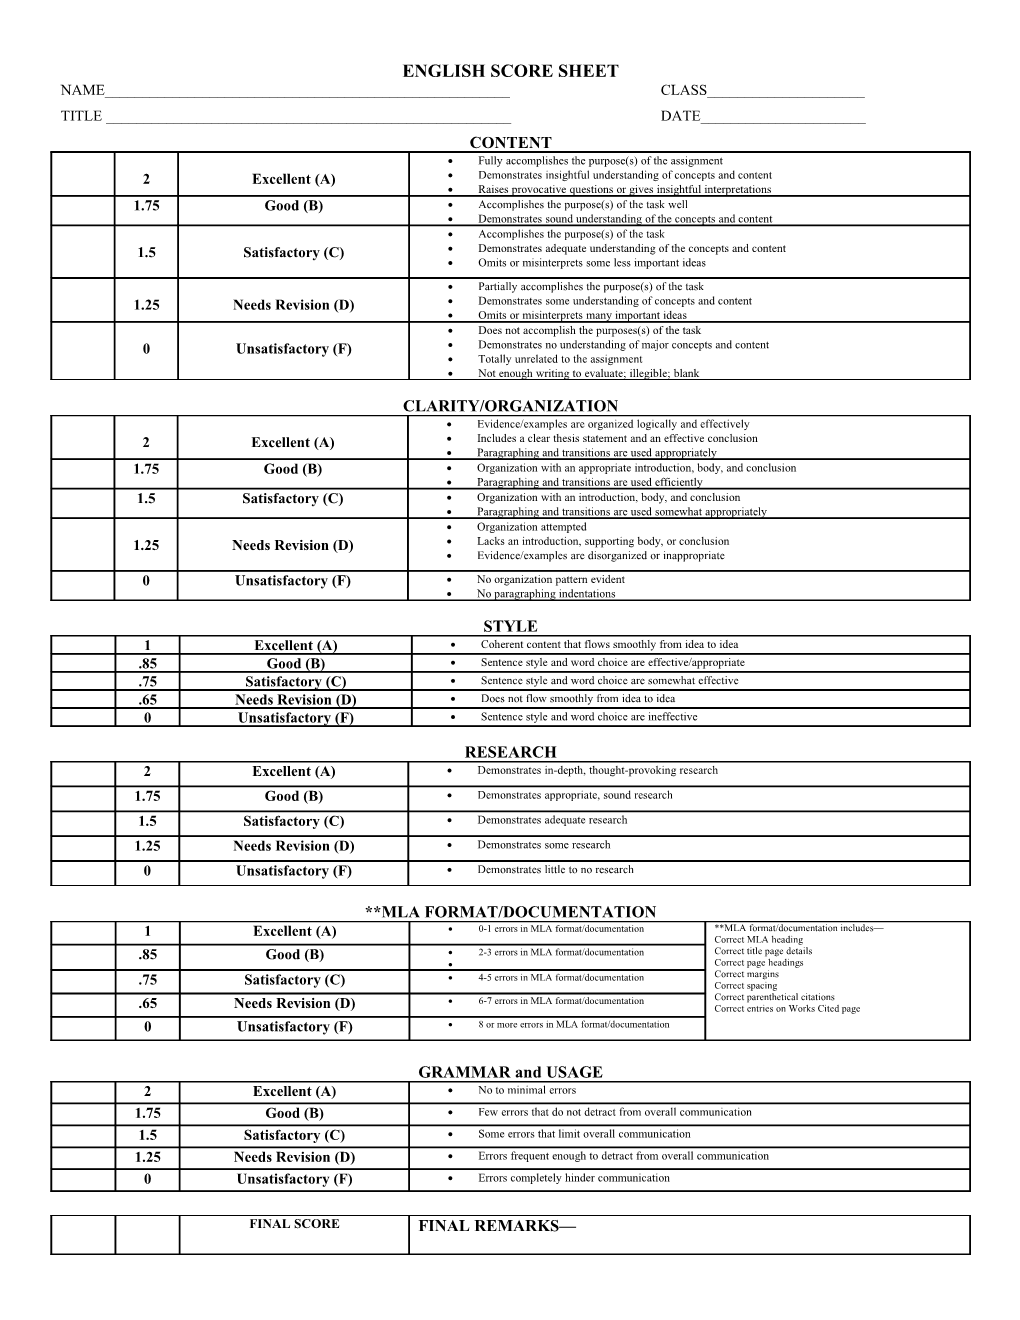 English Score Sheet/2